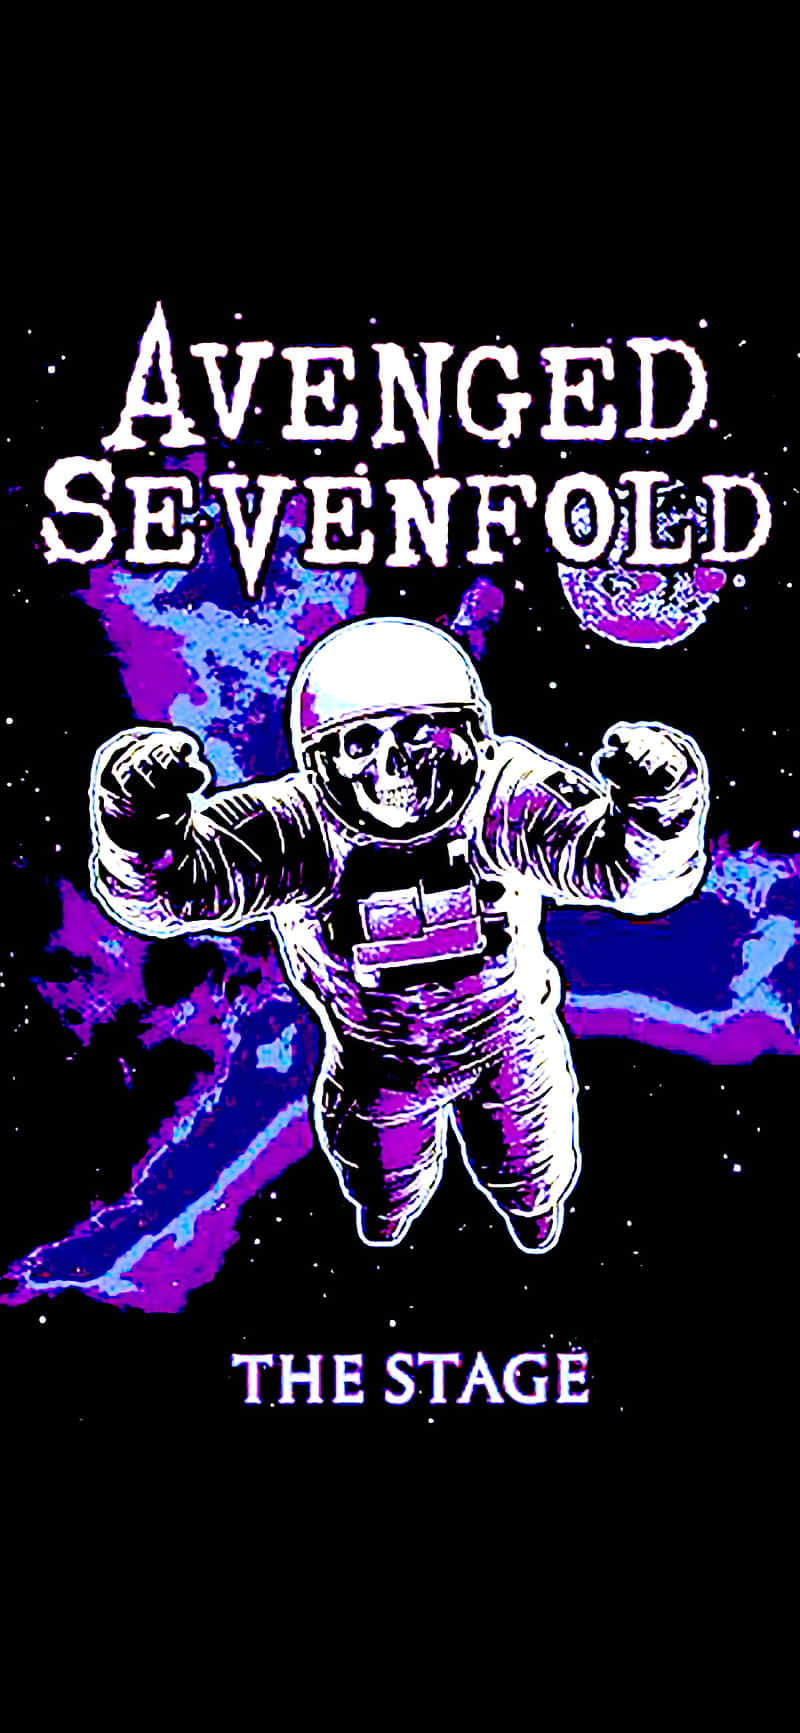 Muestratu Amor Por Avenged Sevenfold Con Este Fondo De Pantalla Para Iphone Fondo de pantalla